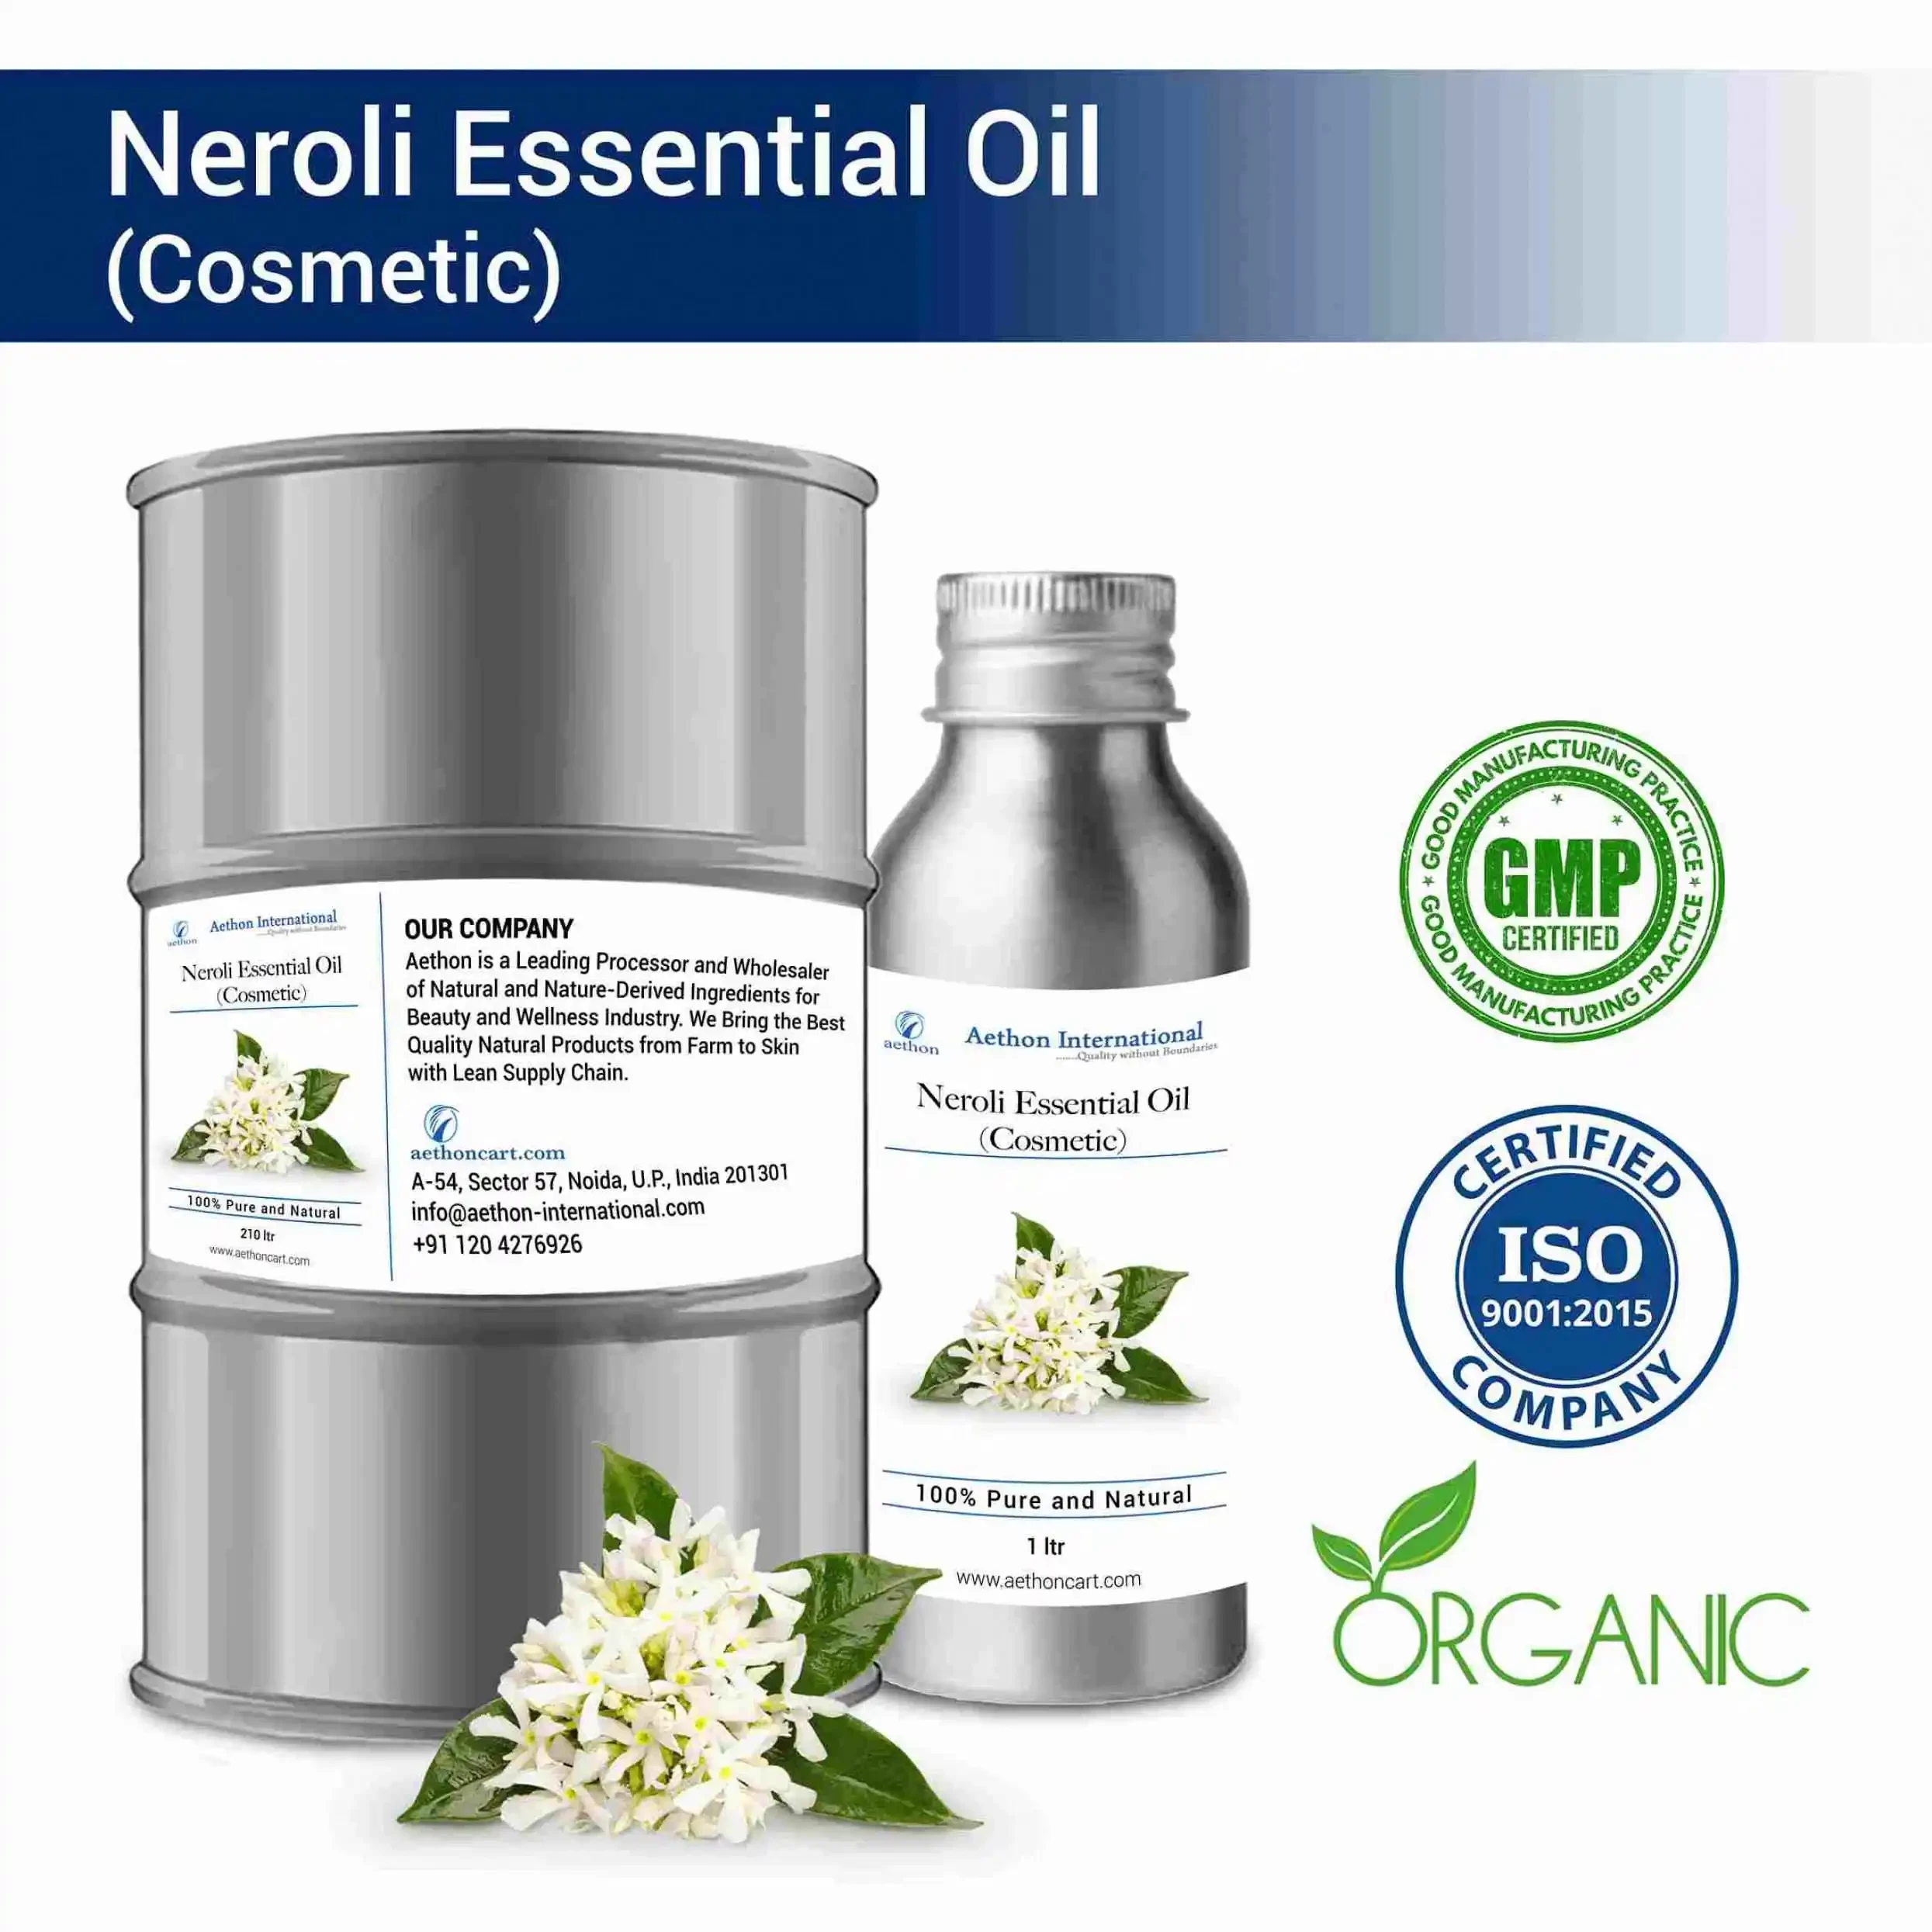 Neroli Essential Oil (Cosmetic)